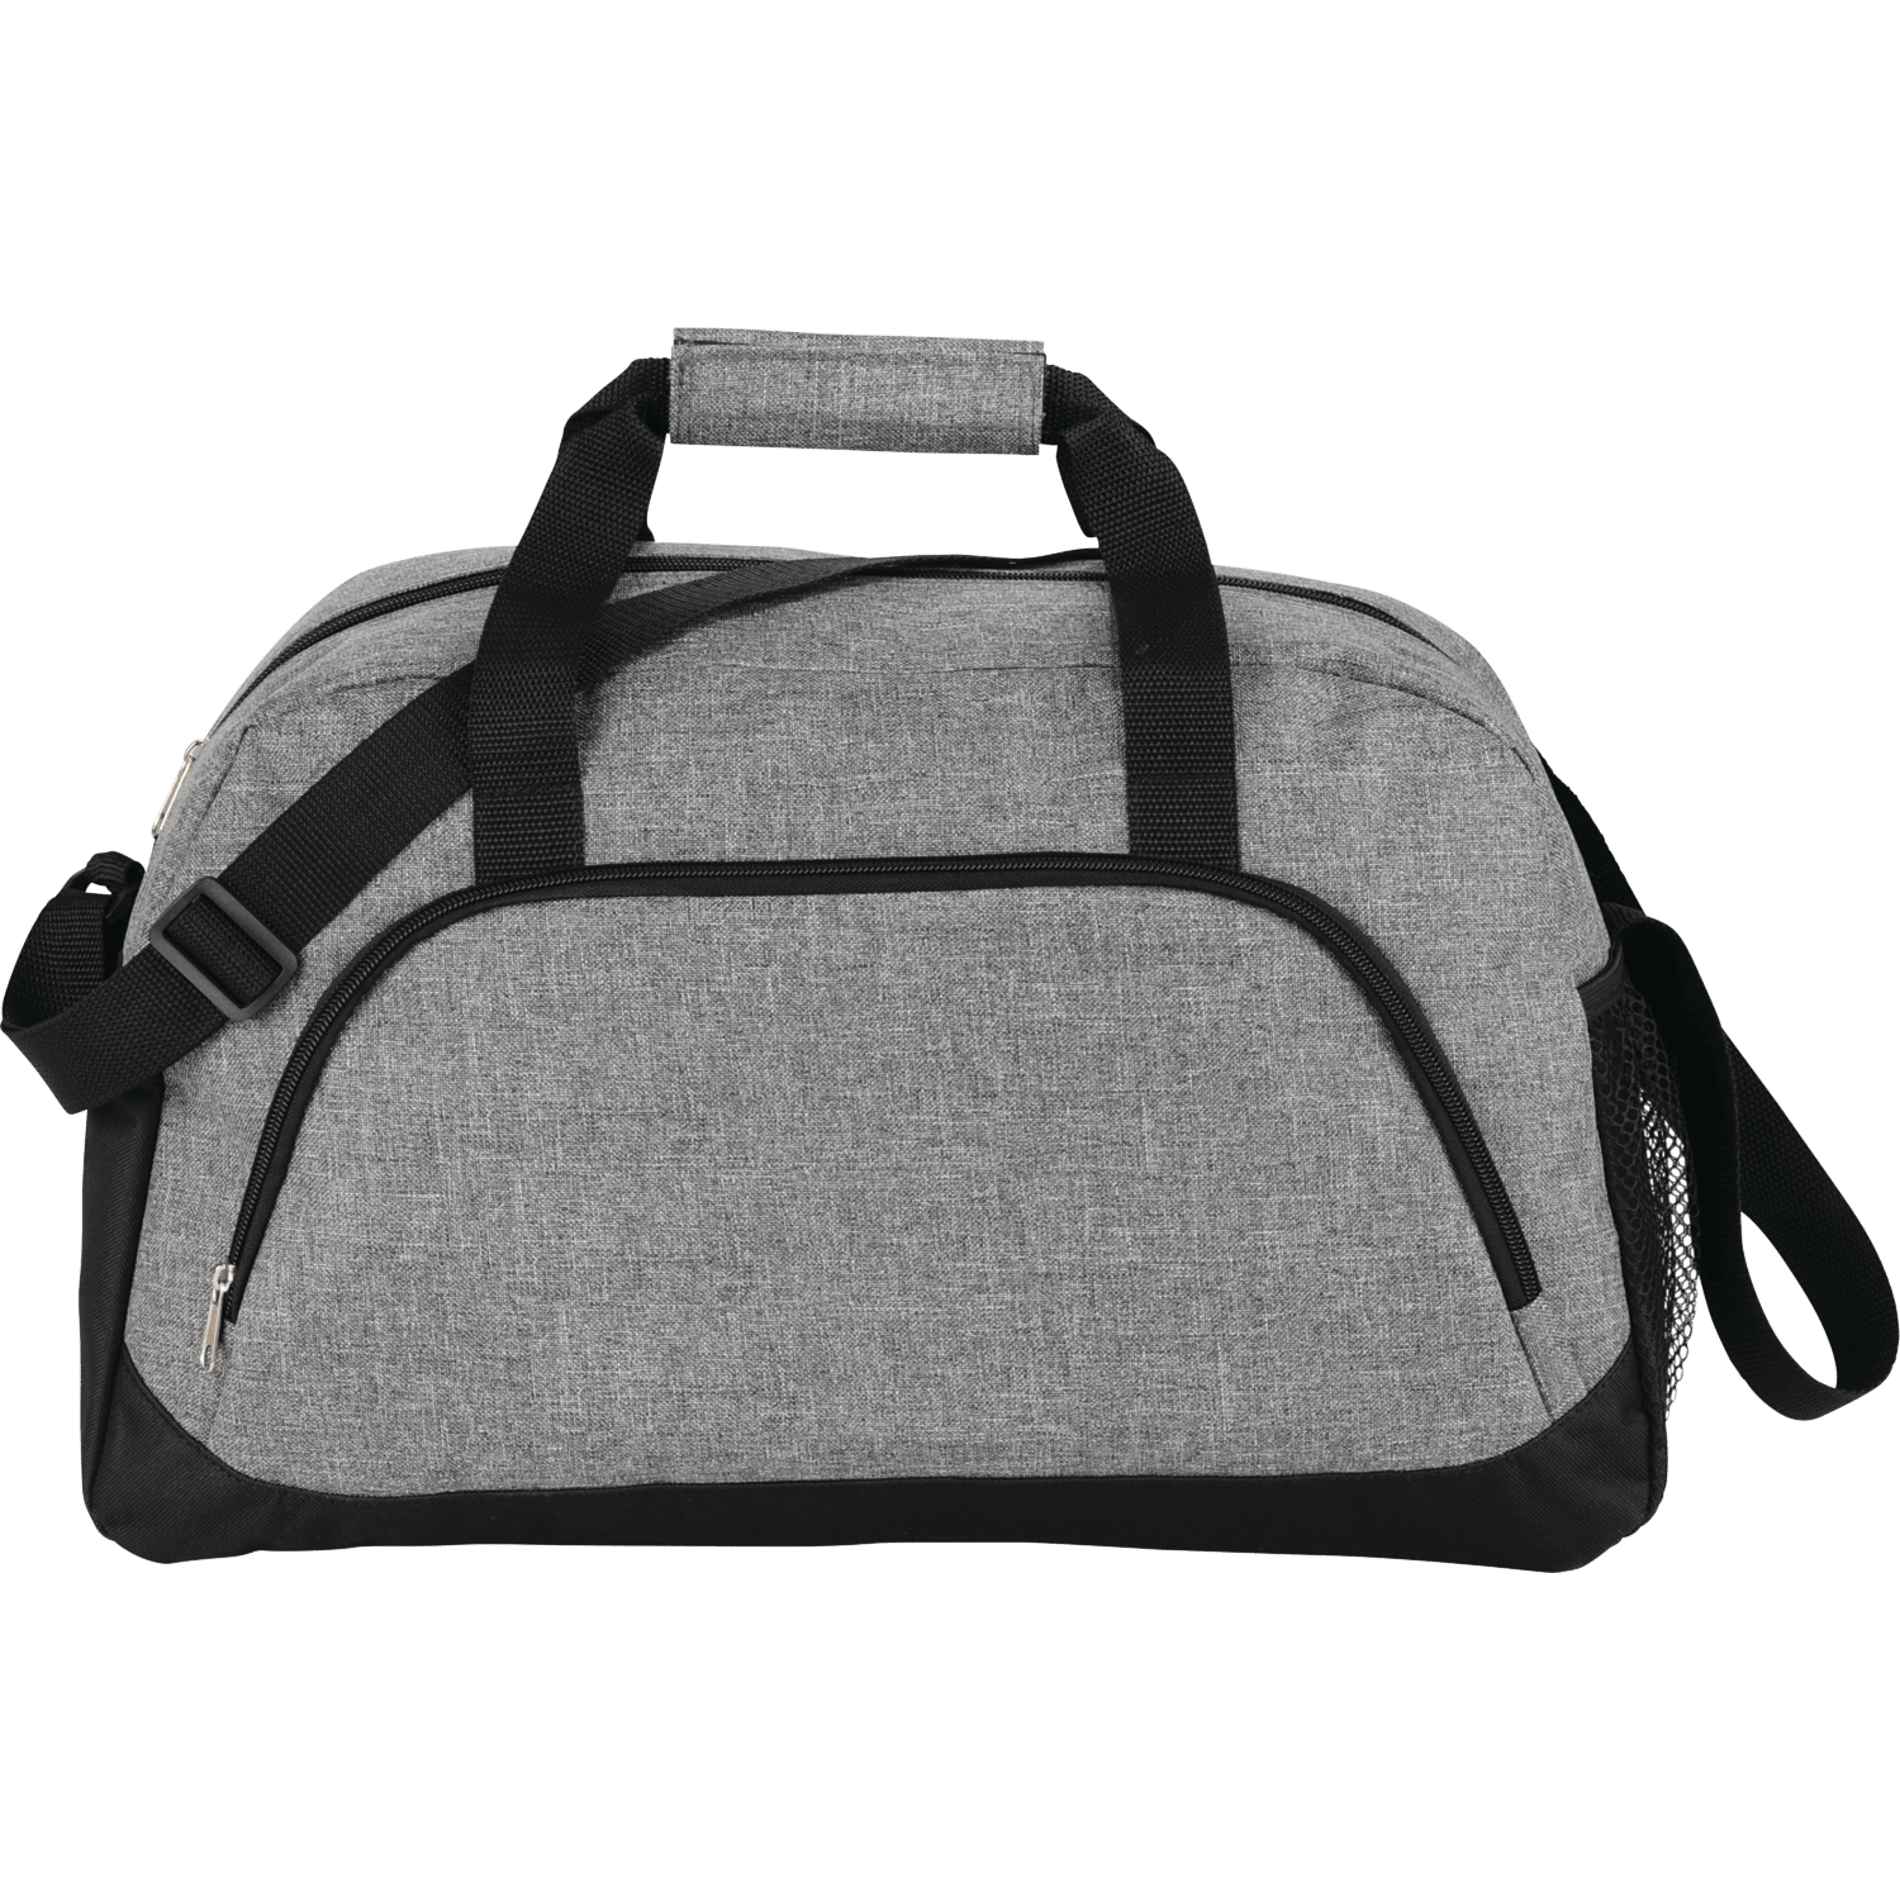 LEEDS 3450-70 - 18.5" Medium Graphite Duffel Bag